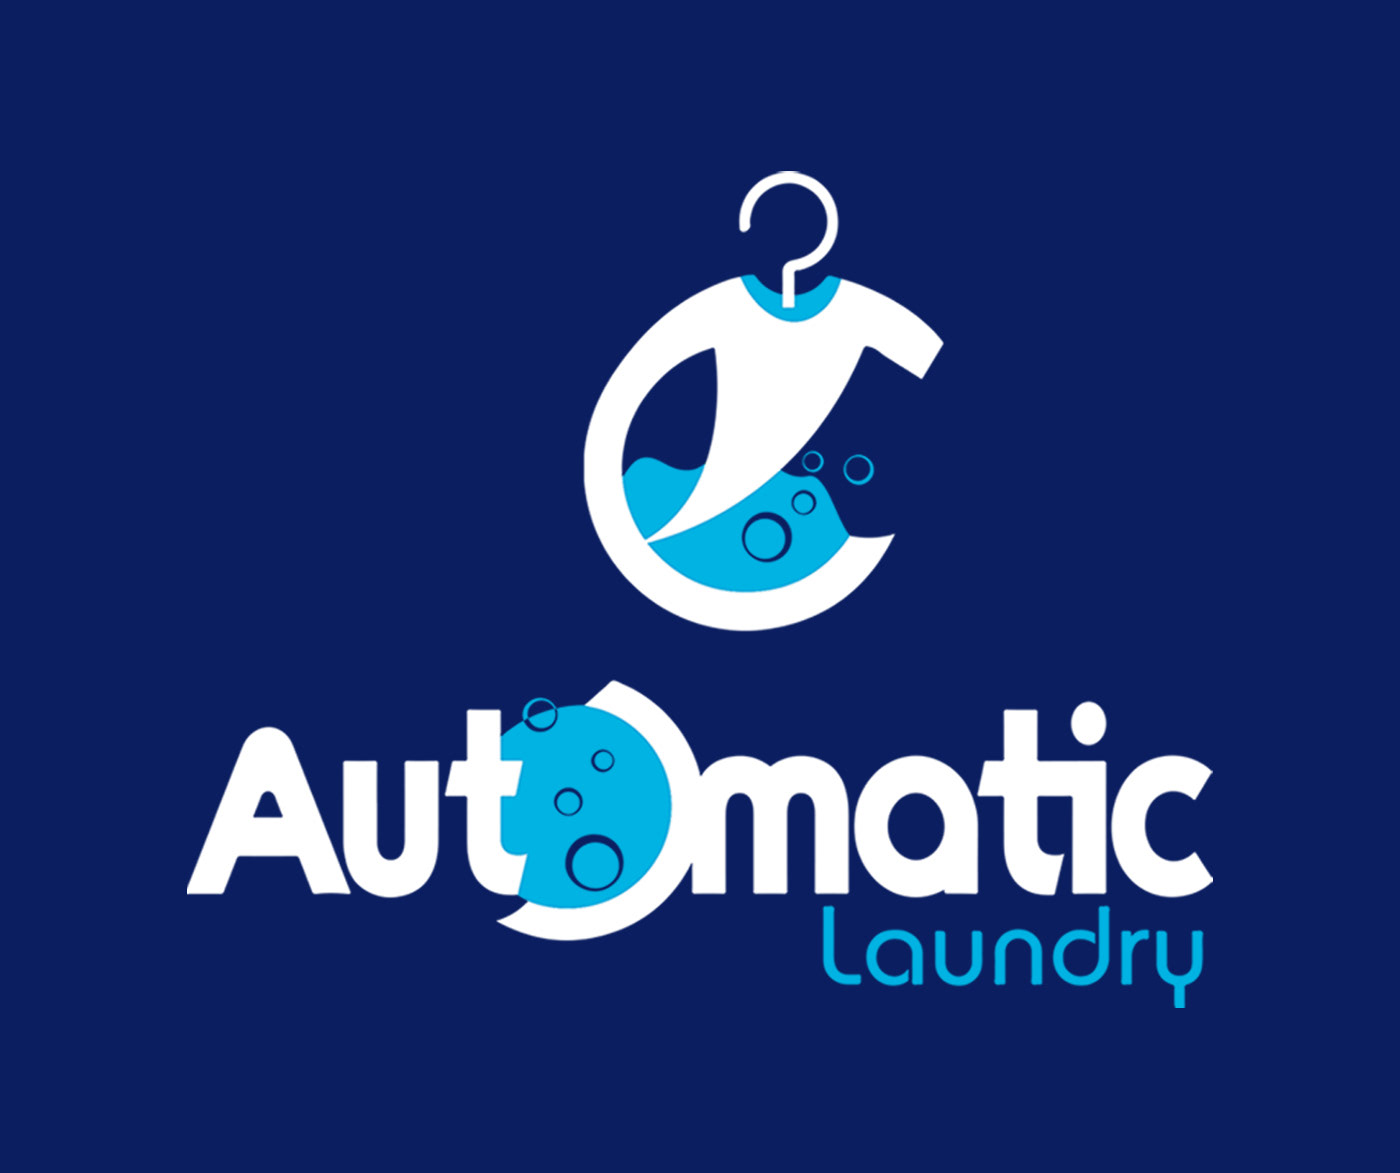 laundry logo brand identity Social media post wash Advertising  Packaging Creative Design poster creative packaging design